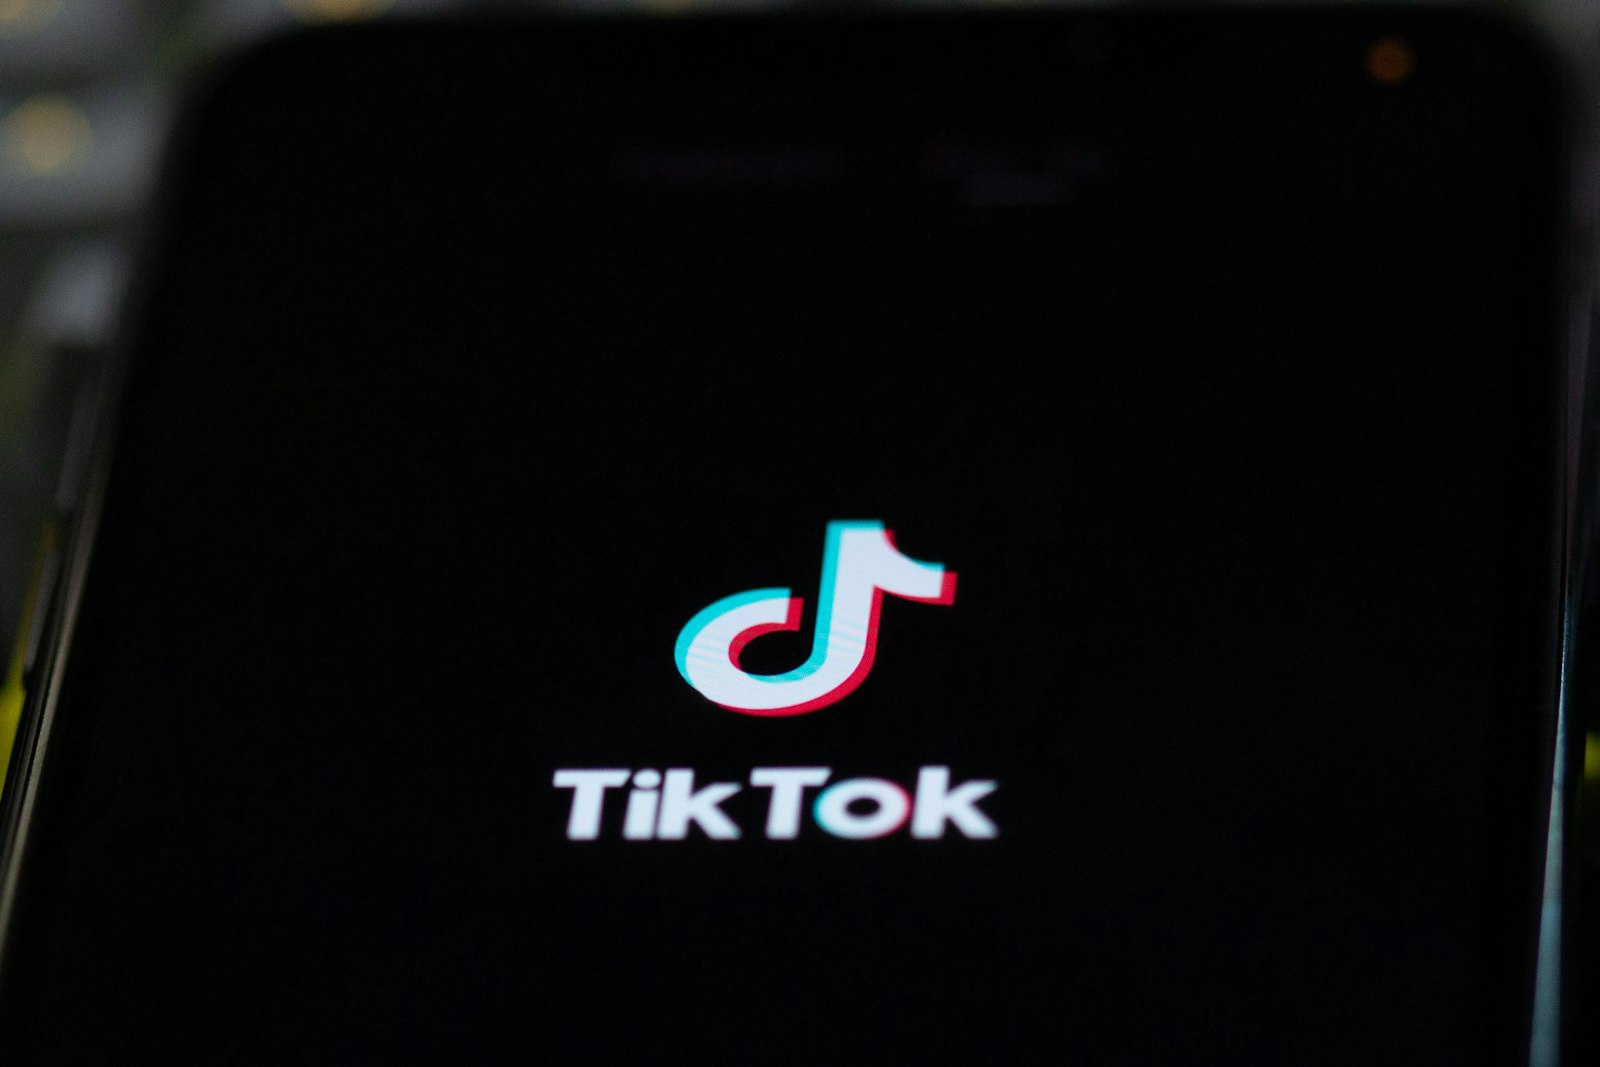 U.S. Sen. Marco Rubio’s proposal to ban TikTok gains momentum - newsjustin.press